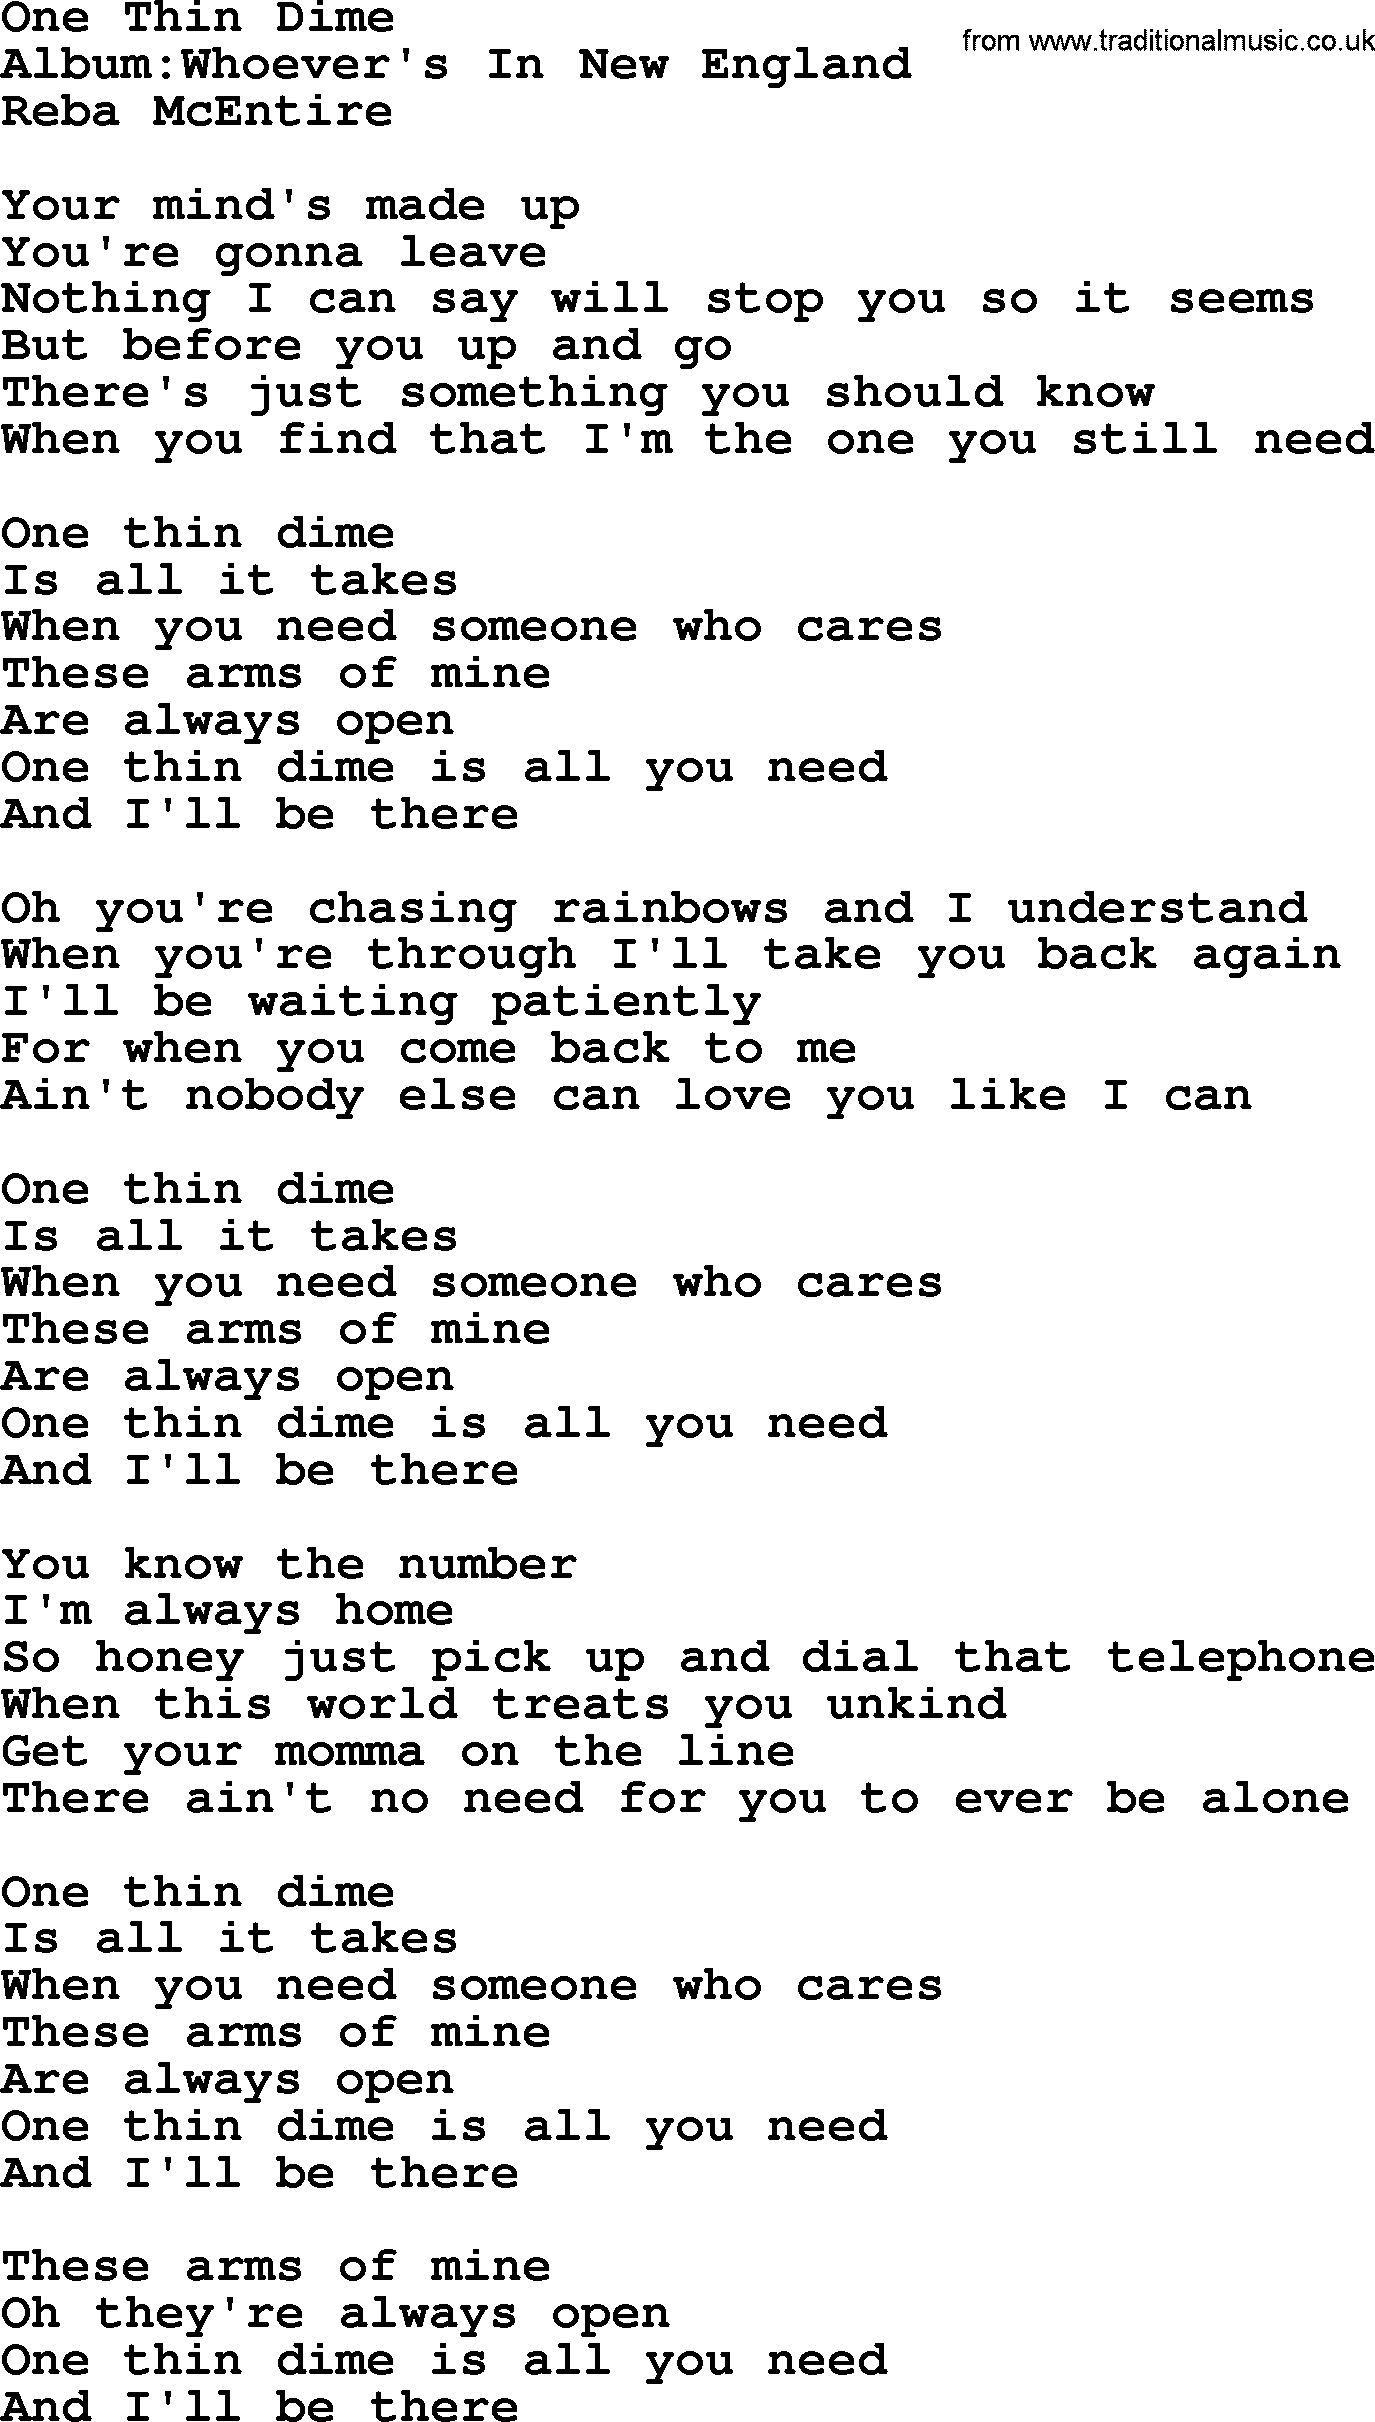 Reba McEntire song: One Thin Dime lyrics